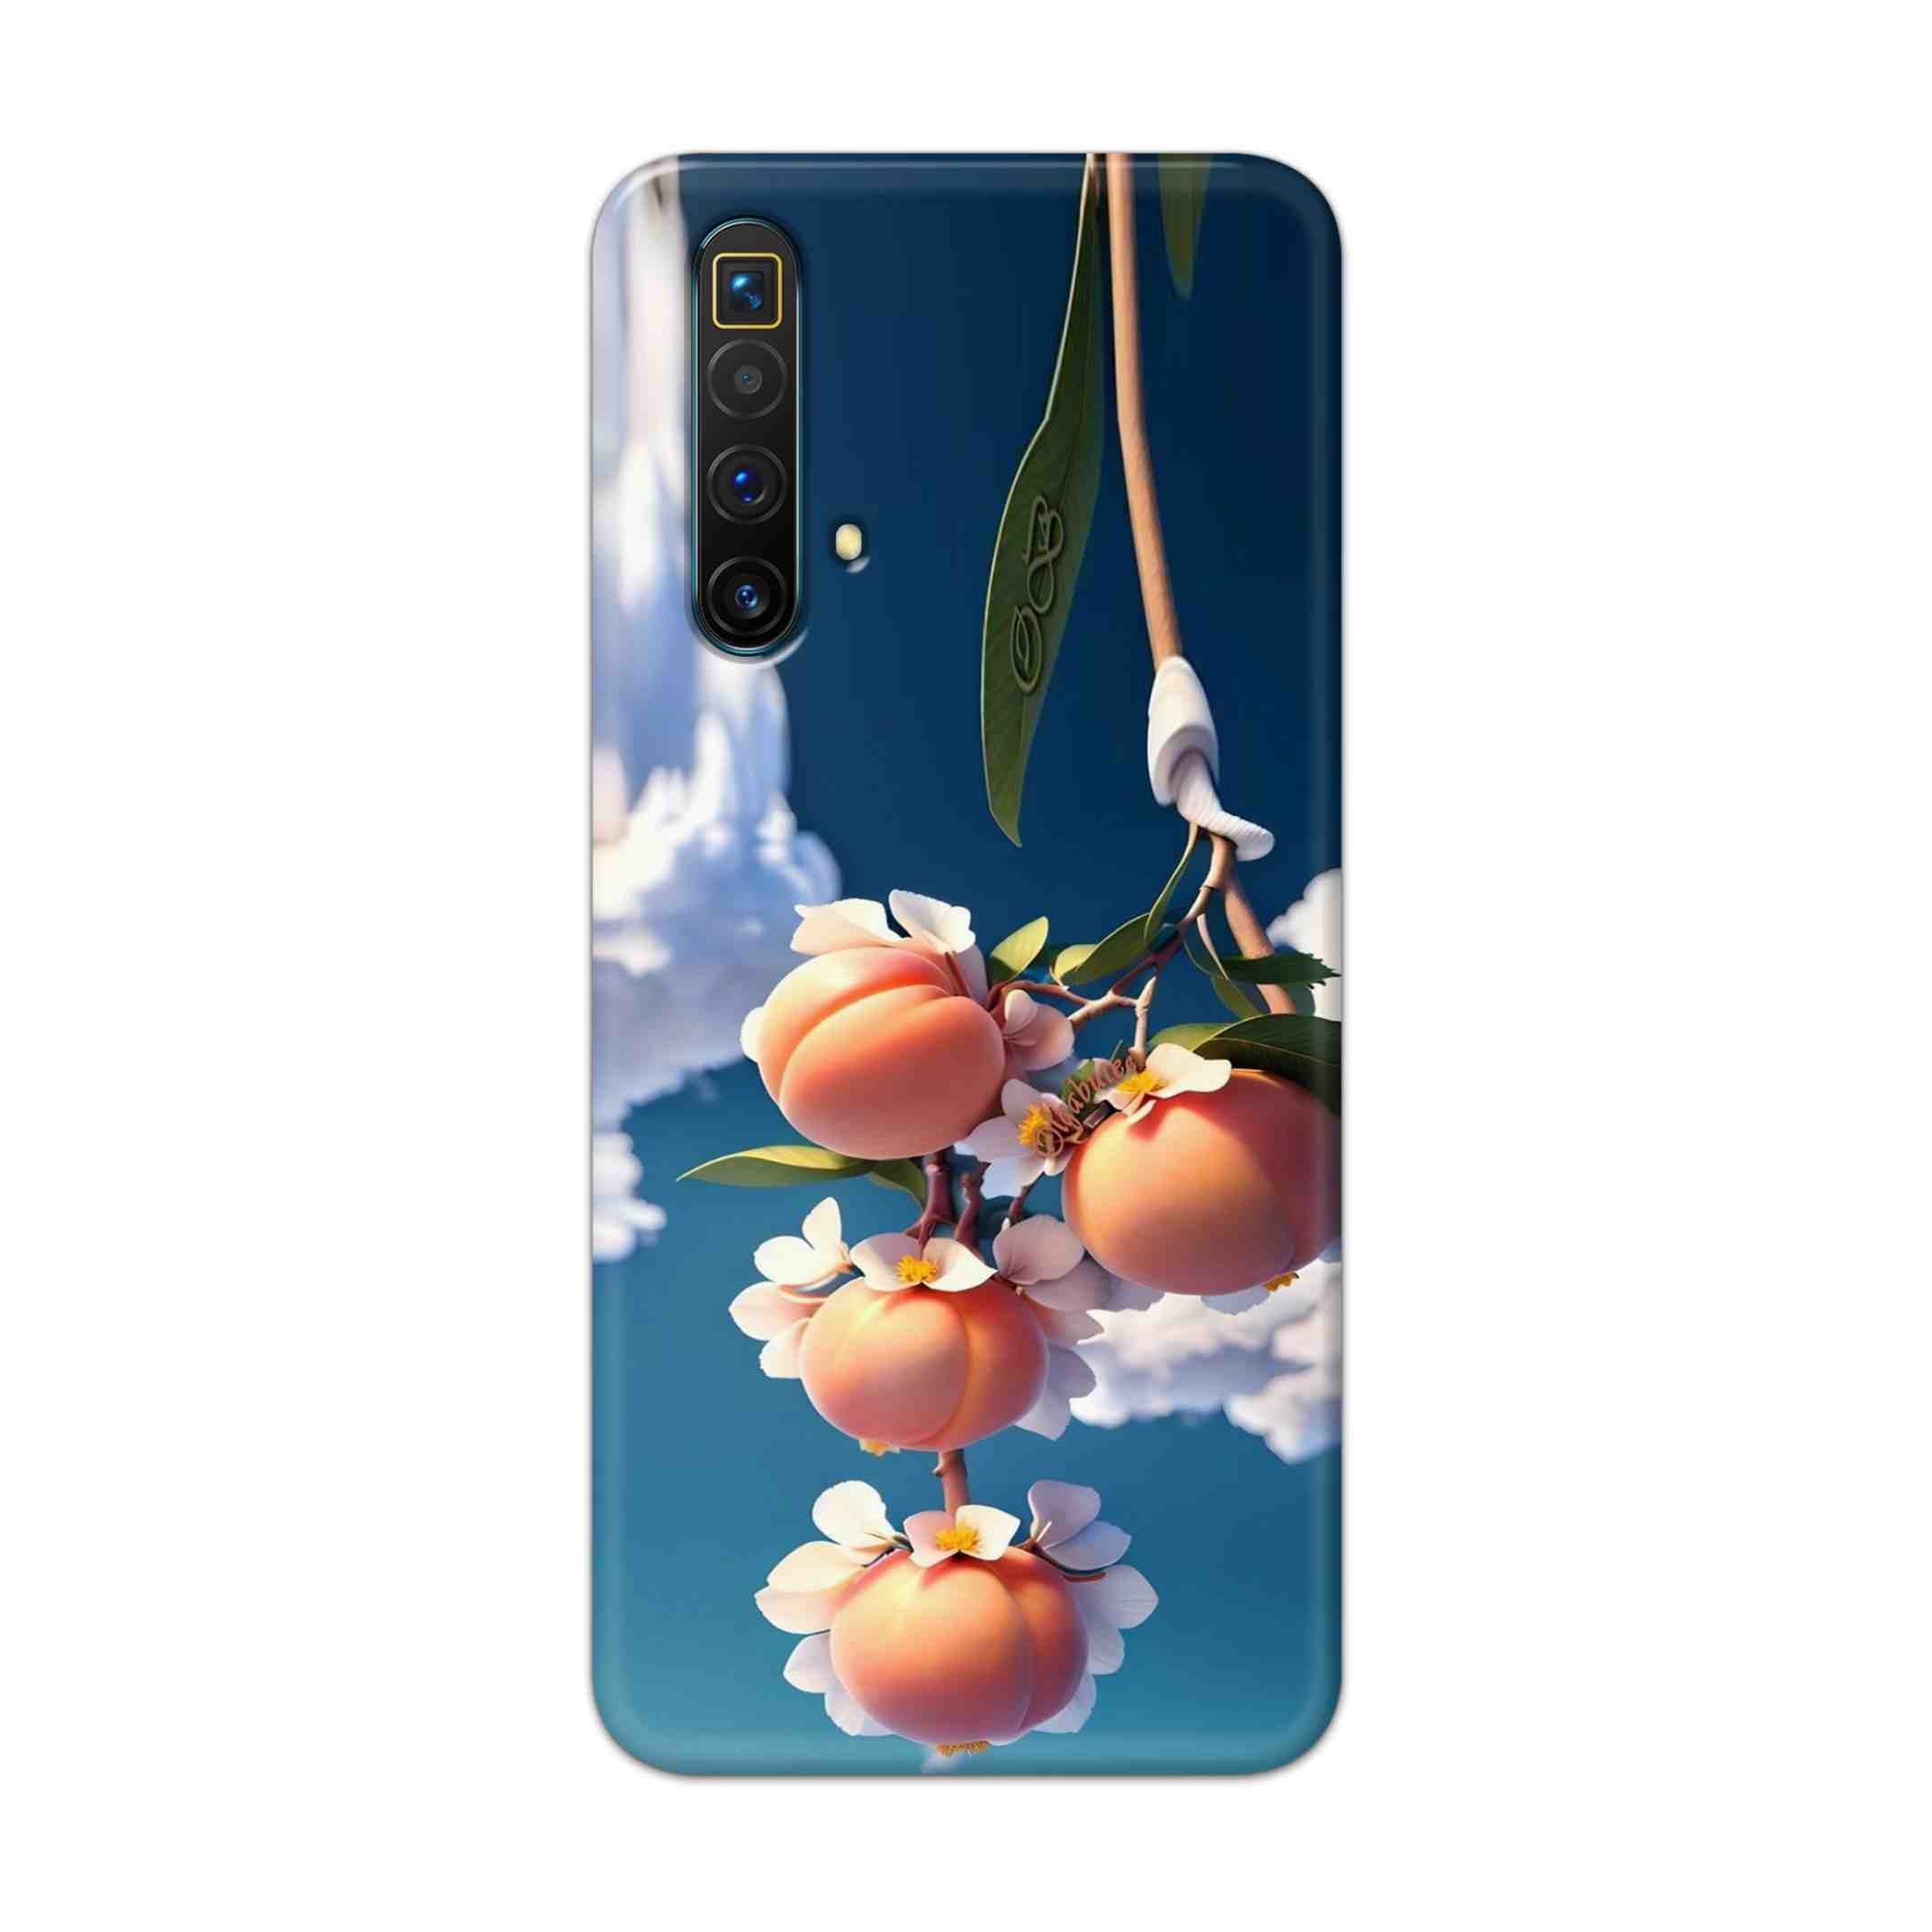 Buy Fruit Hard Back Mobile Phone Case Cover For Realme X3 Superzoom Online